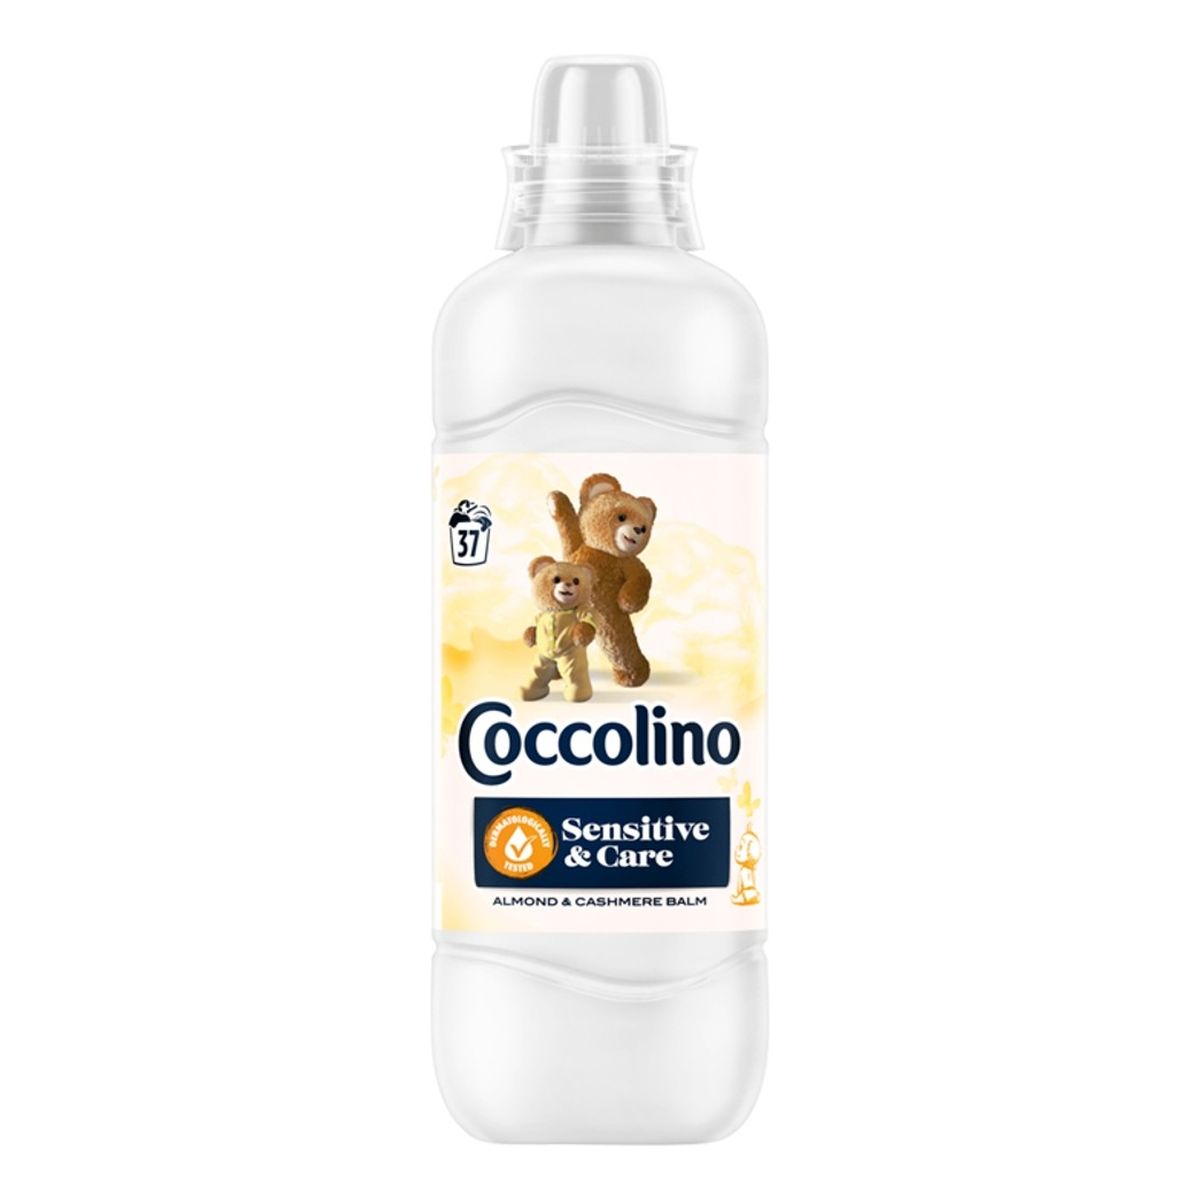 Coccolino Sensitive & Care Płyn do Płukania Tkanin Almond & Cashmere Balm (37 Prań) 925ml